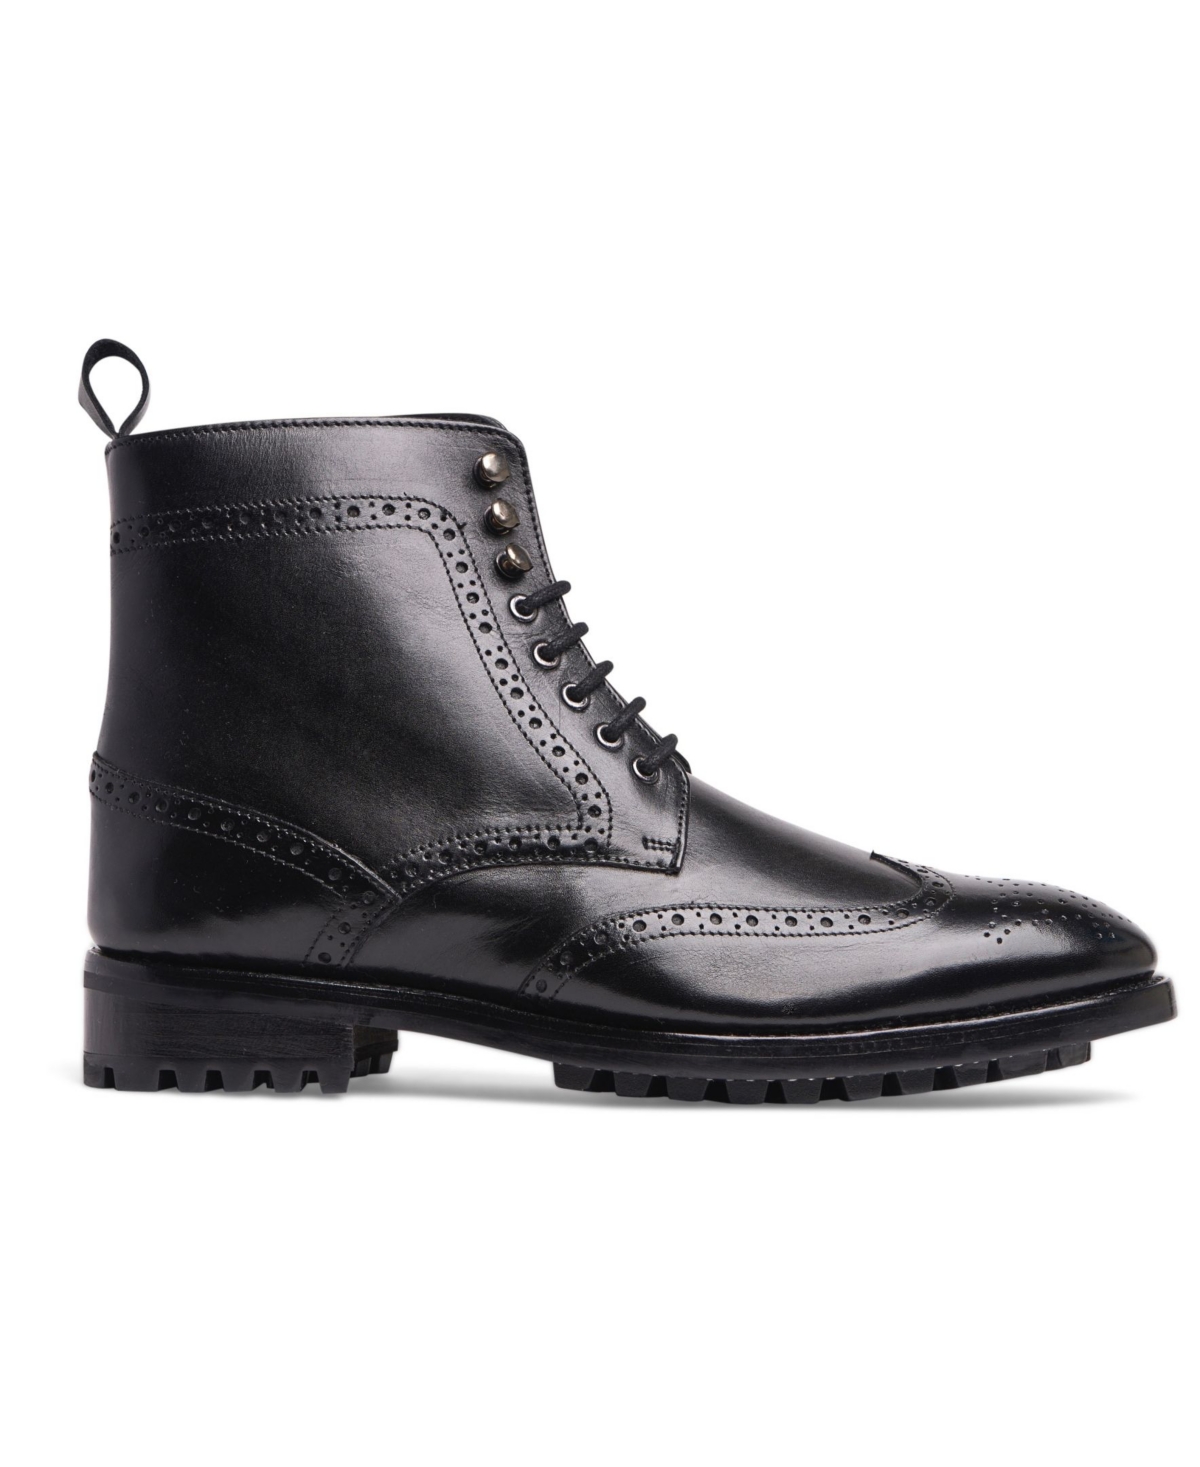 Men's Grant Wingtip Leather Dress Boot - Black